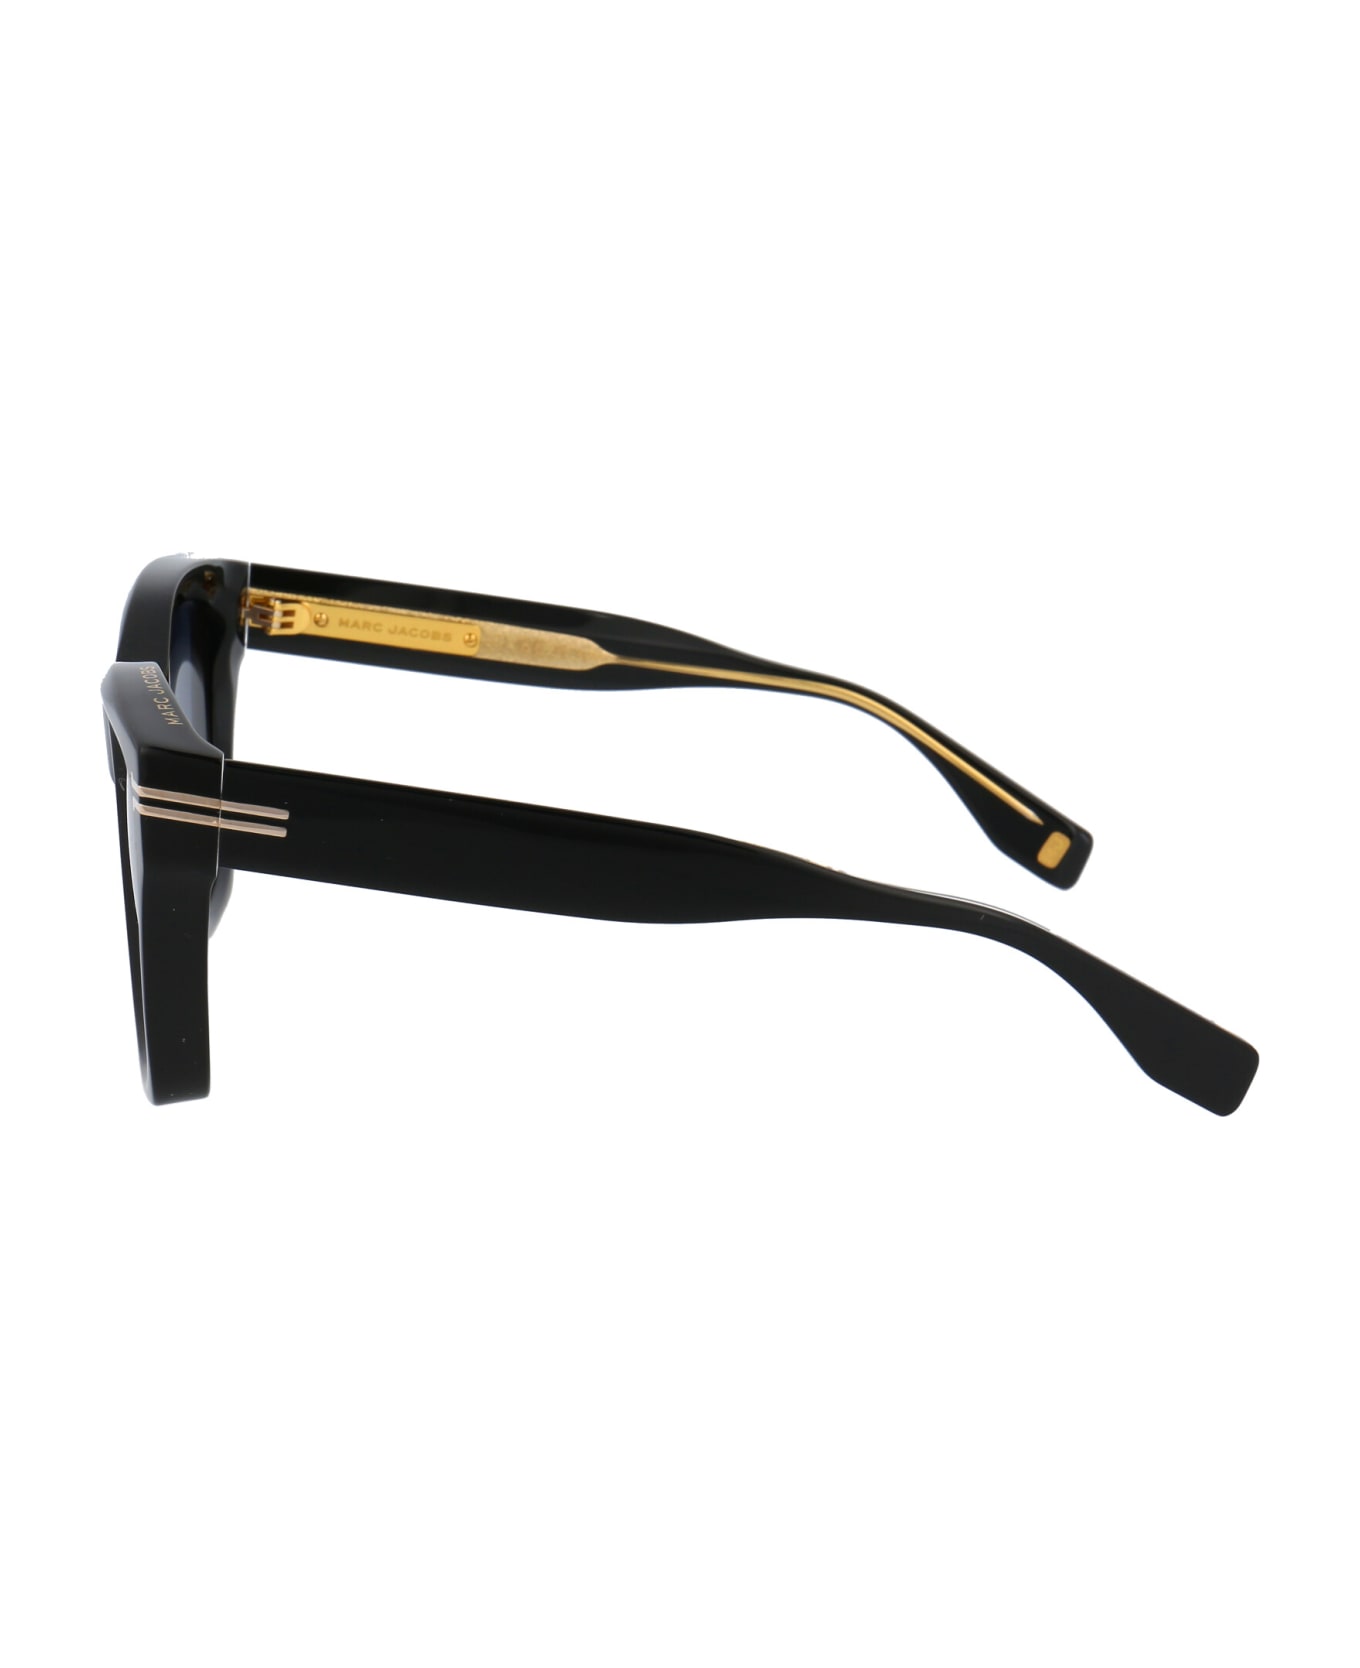 Marc Jacobs Eyewear Mj 1000/s Sunglasses - 8079O BLACK